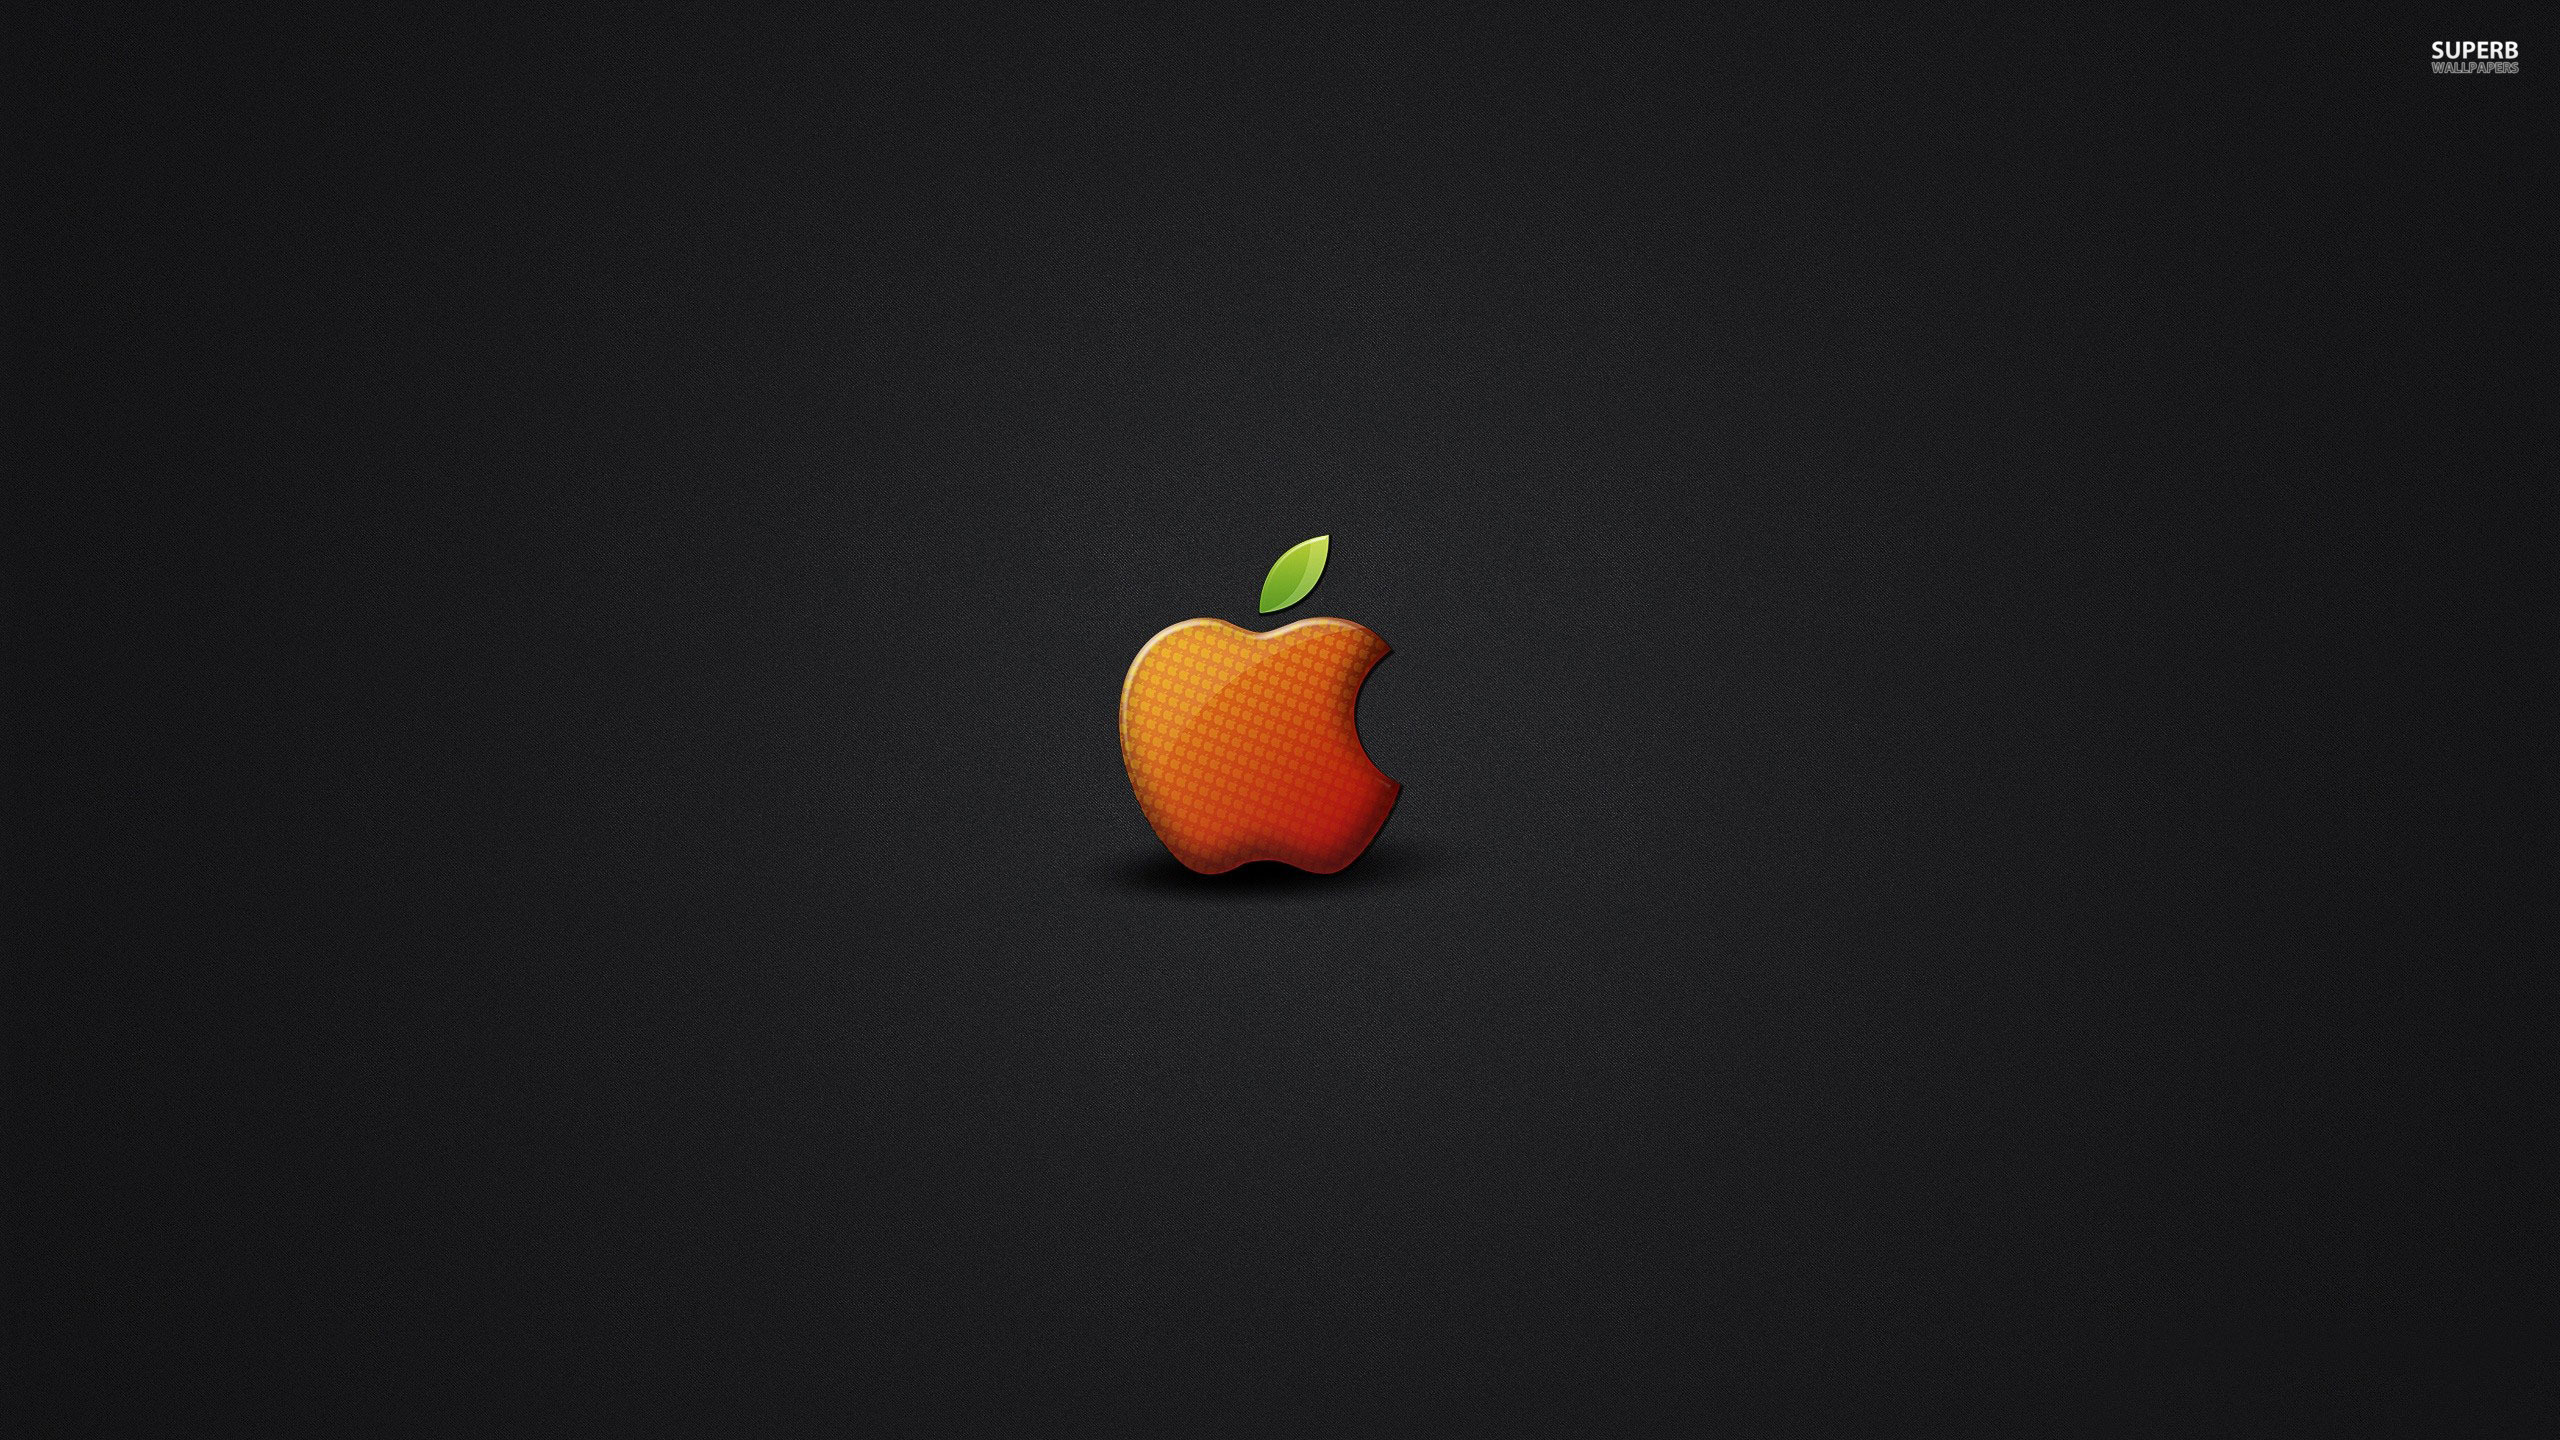 Wallpapers Apple Logo Www Superb Com 2560x1440 #apple logo